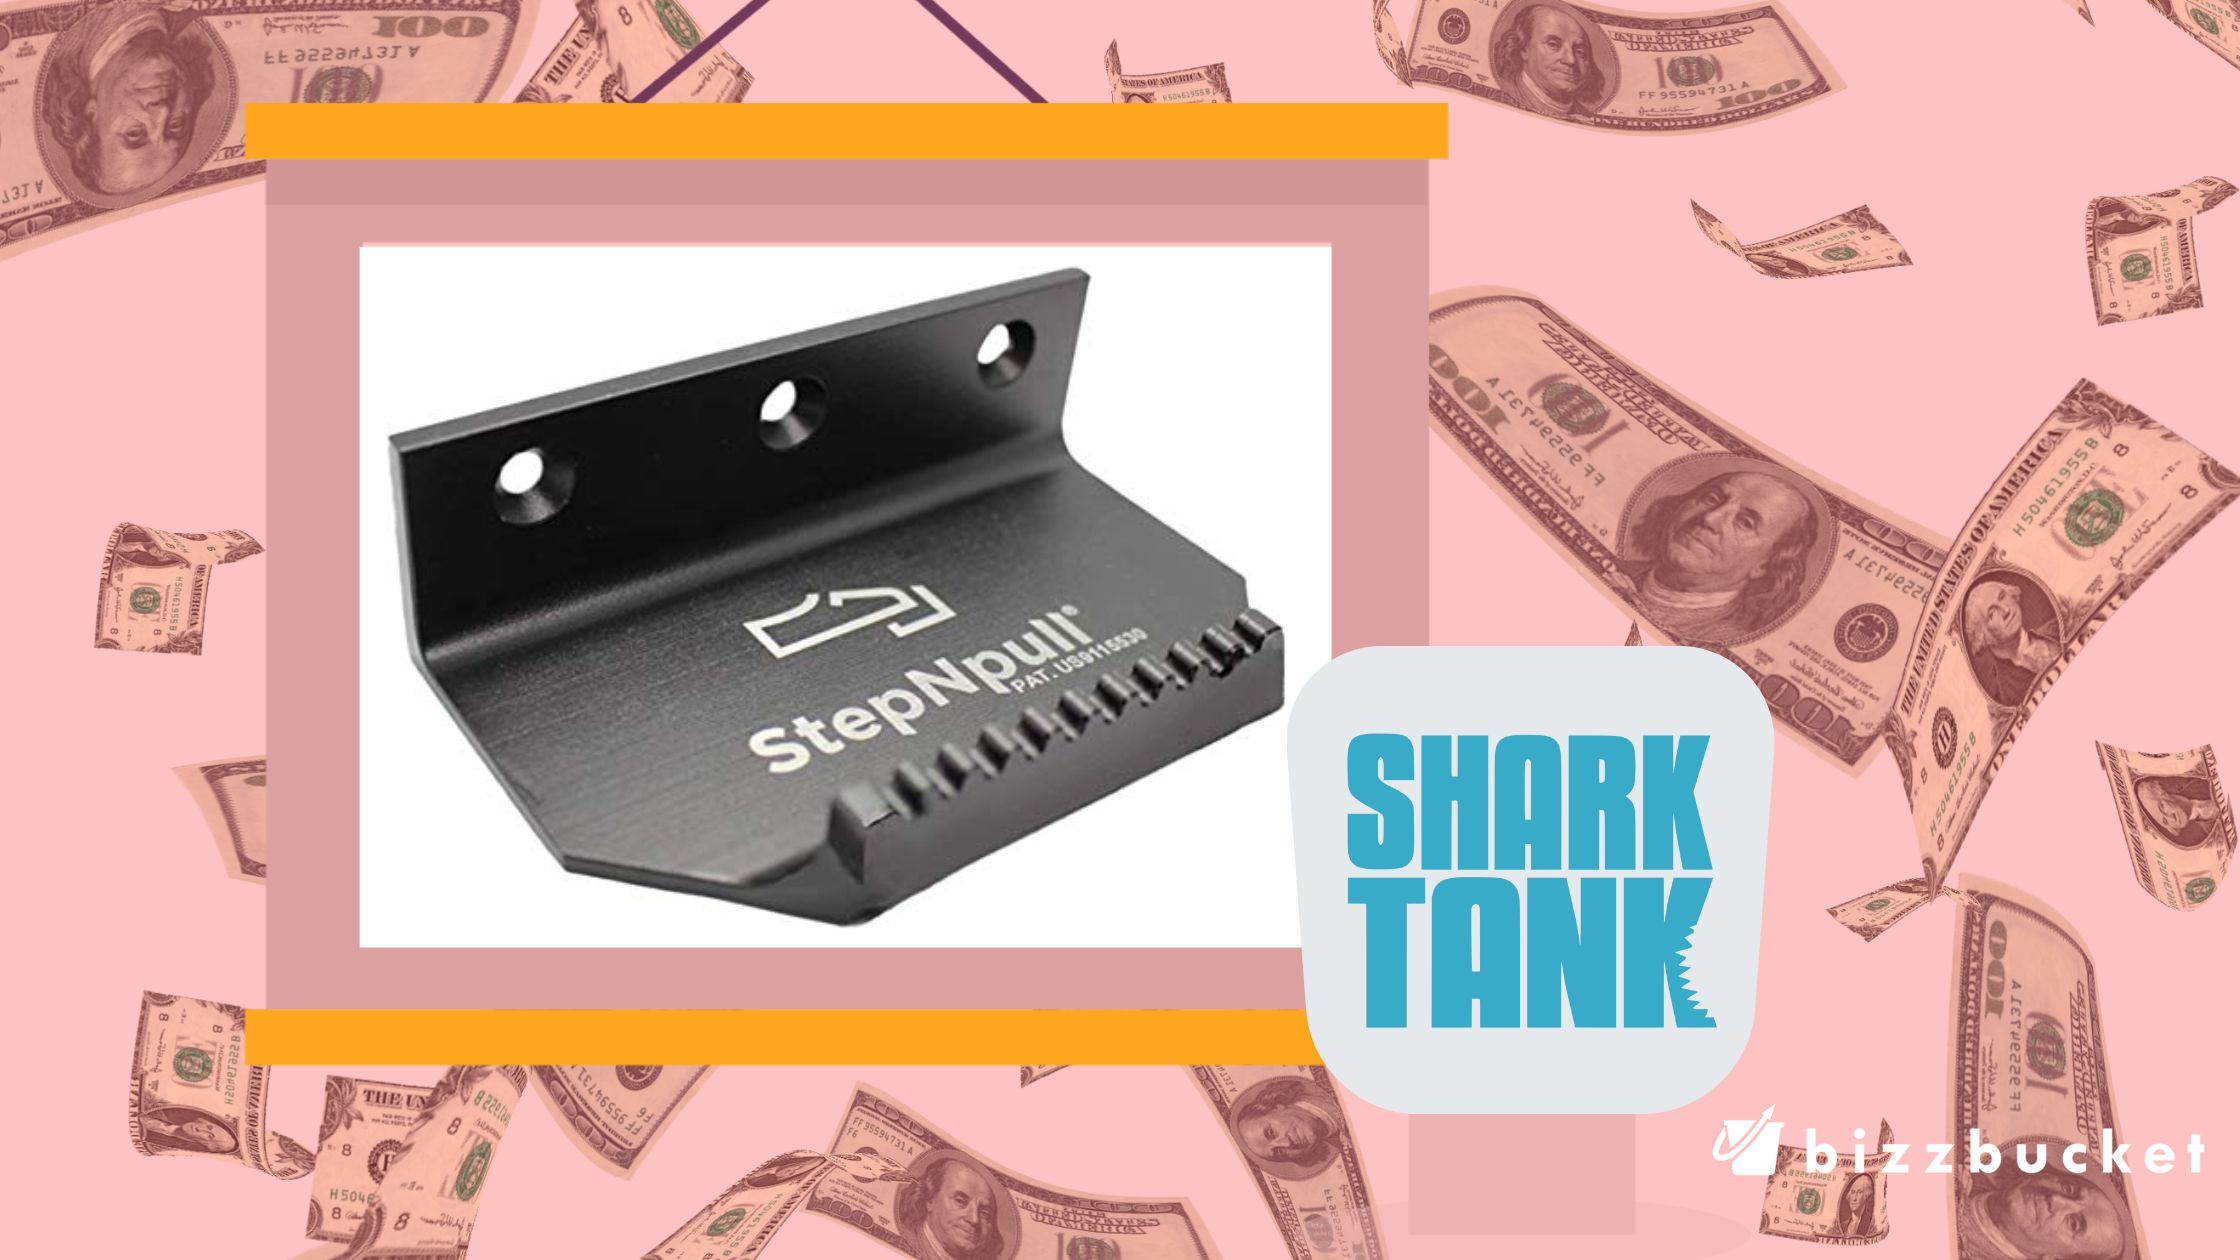 StepNPull shark tank update